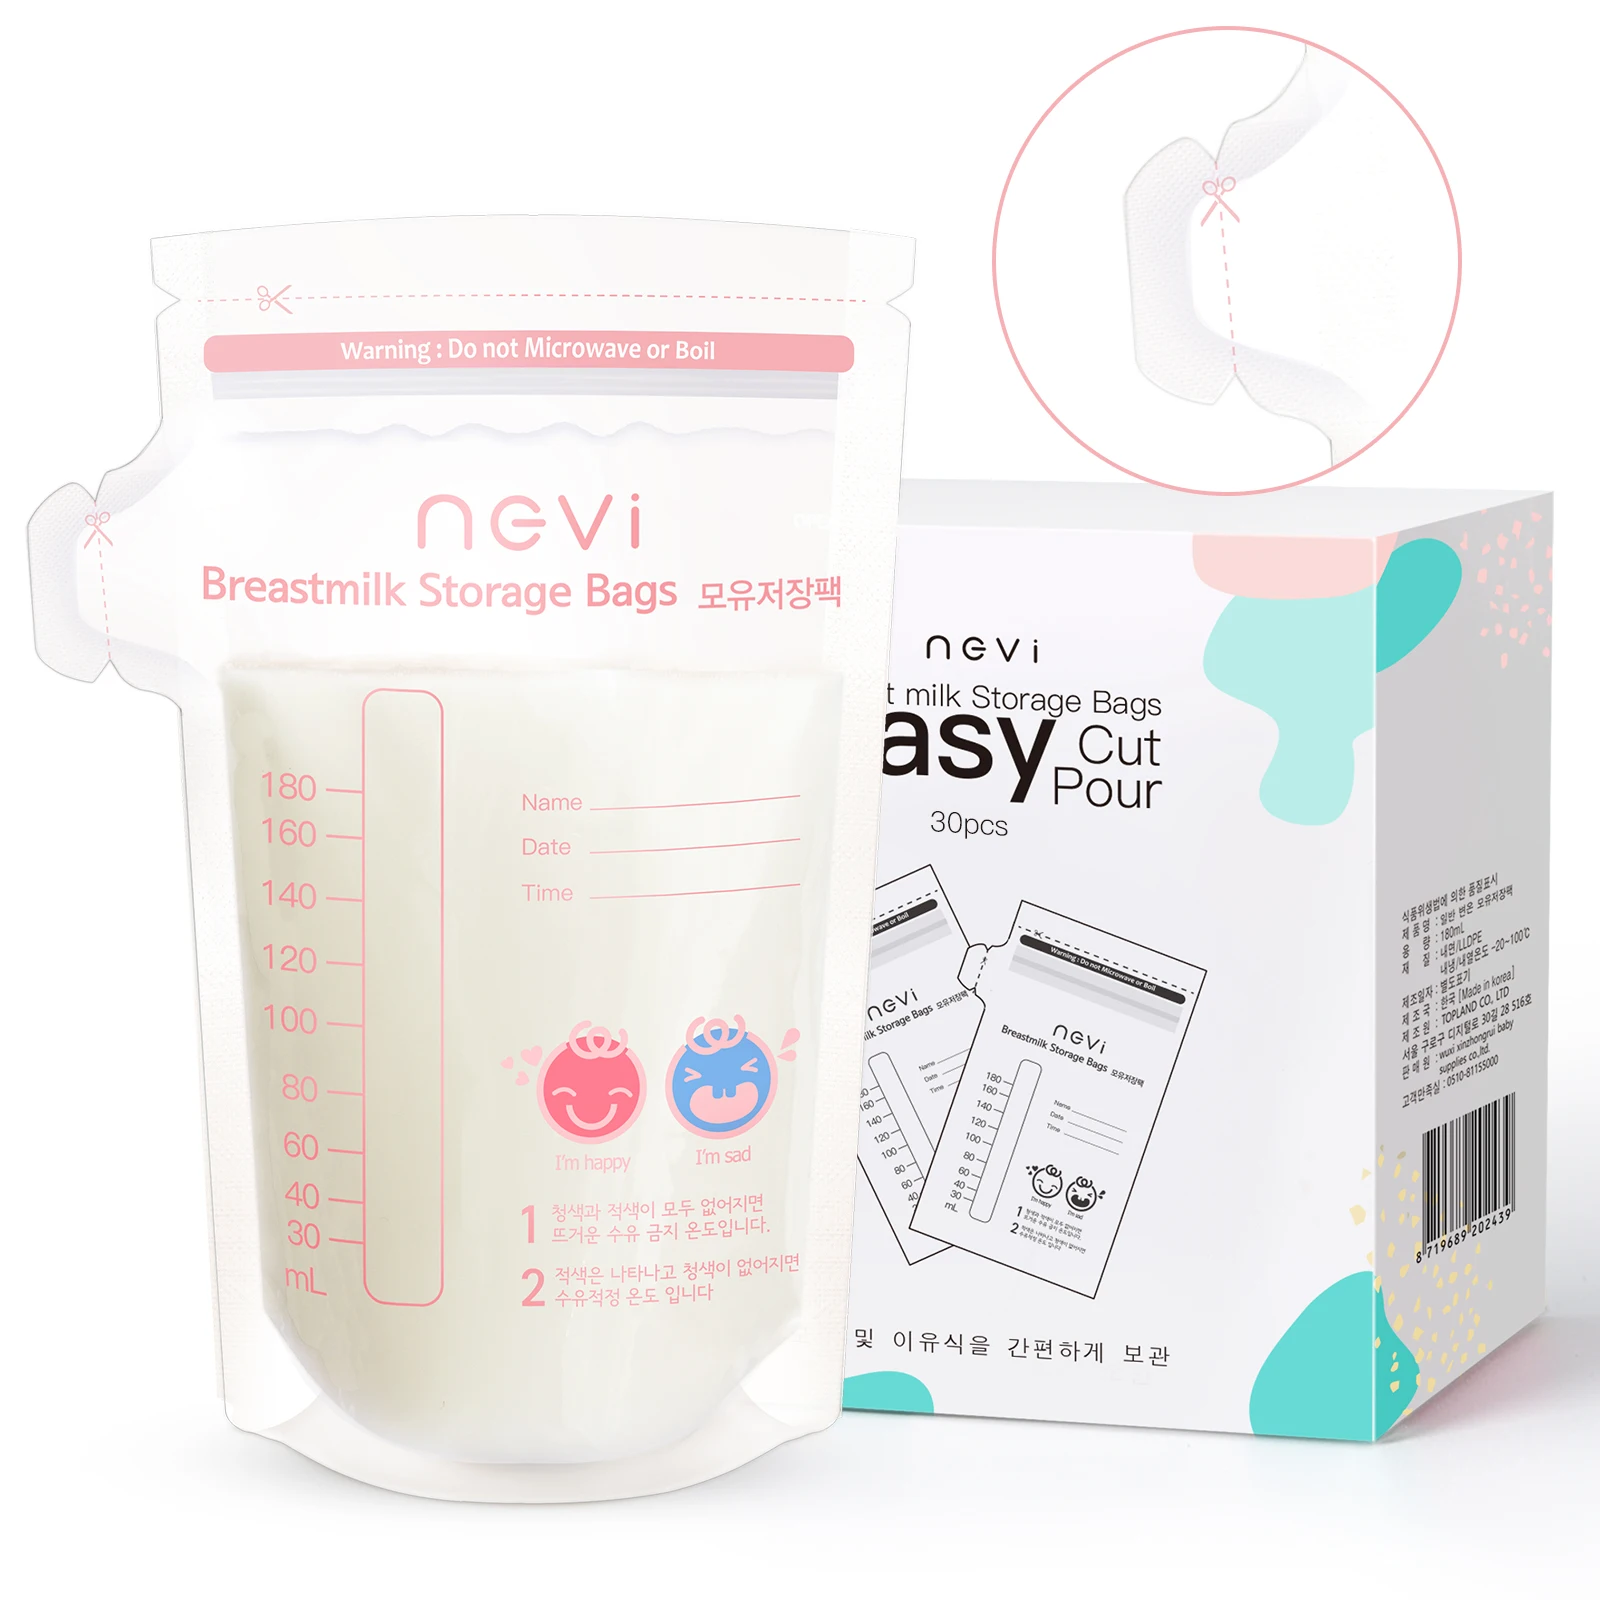 

NCVI Breastmilk Storage Bags,180 Counts 6 Oz Milk Freezer Bags for Long Term Breastfeeding Storage Imported From Korea,BPA Free